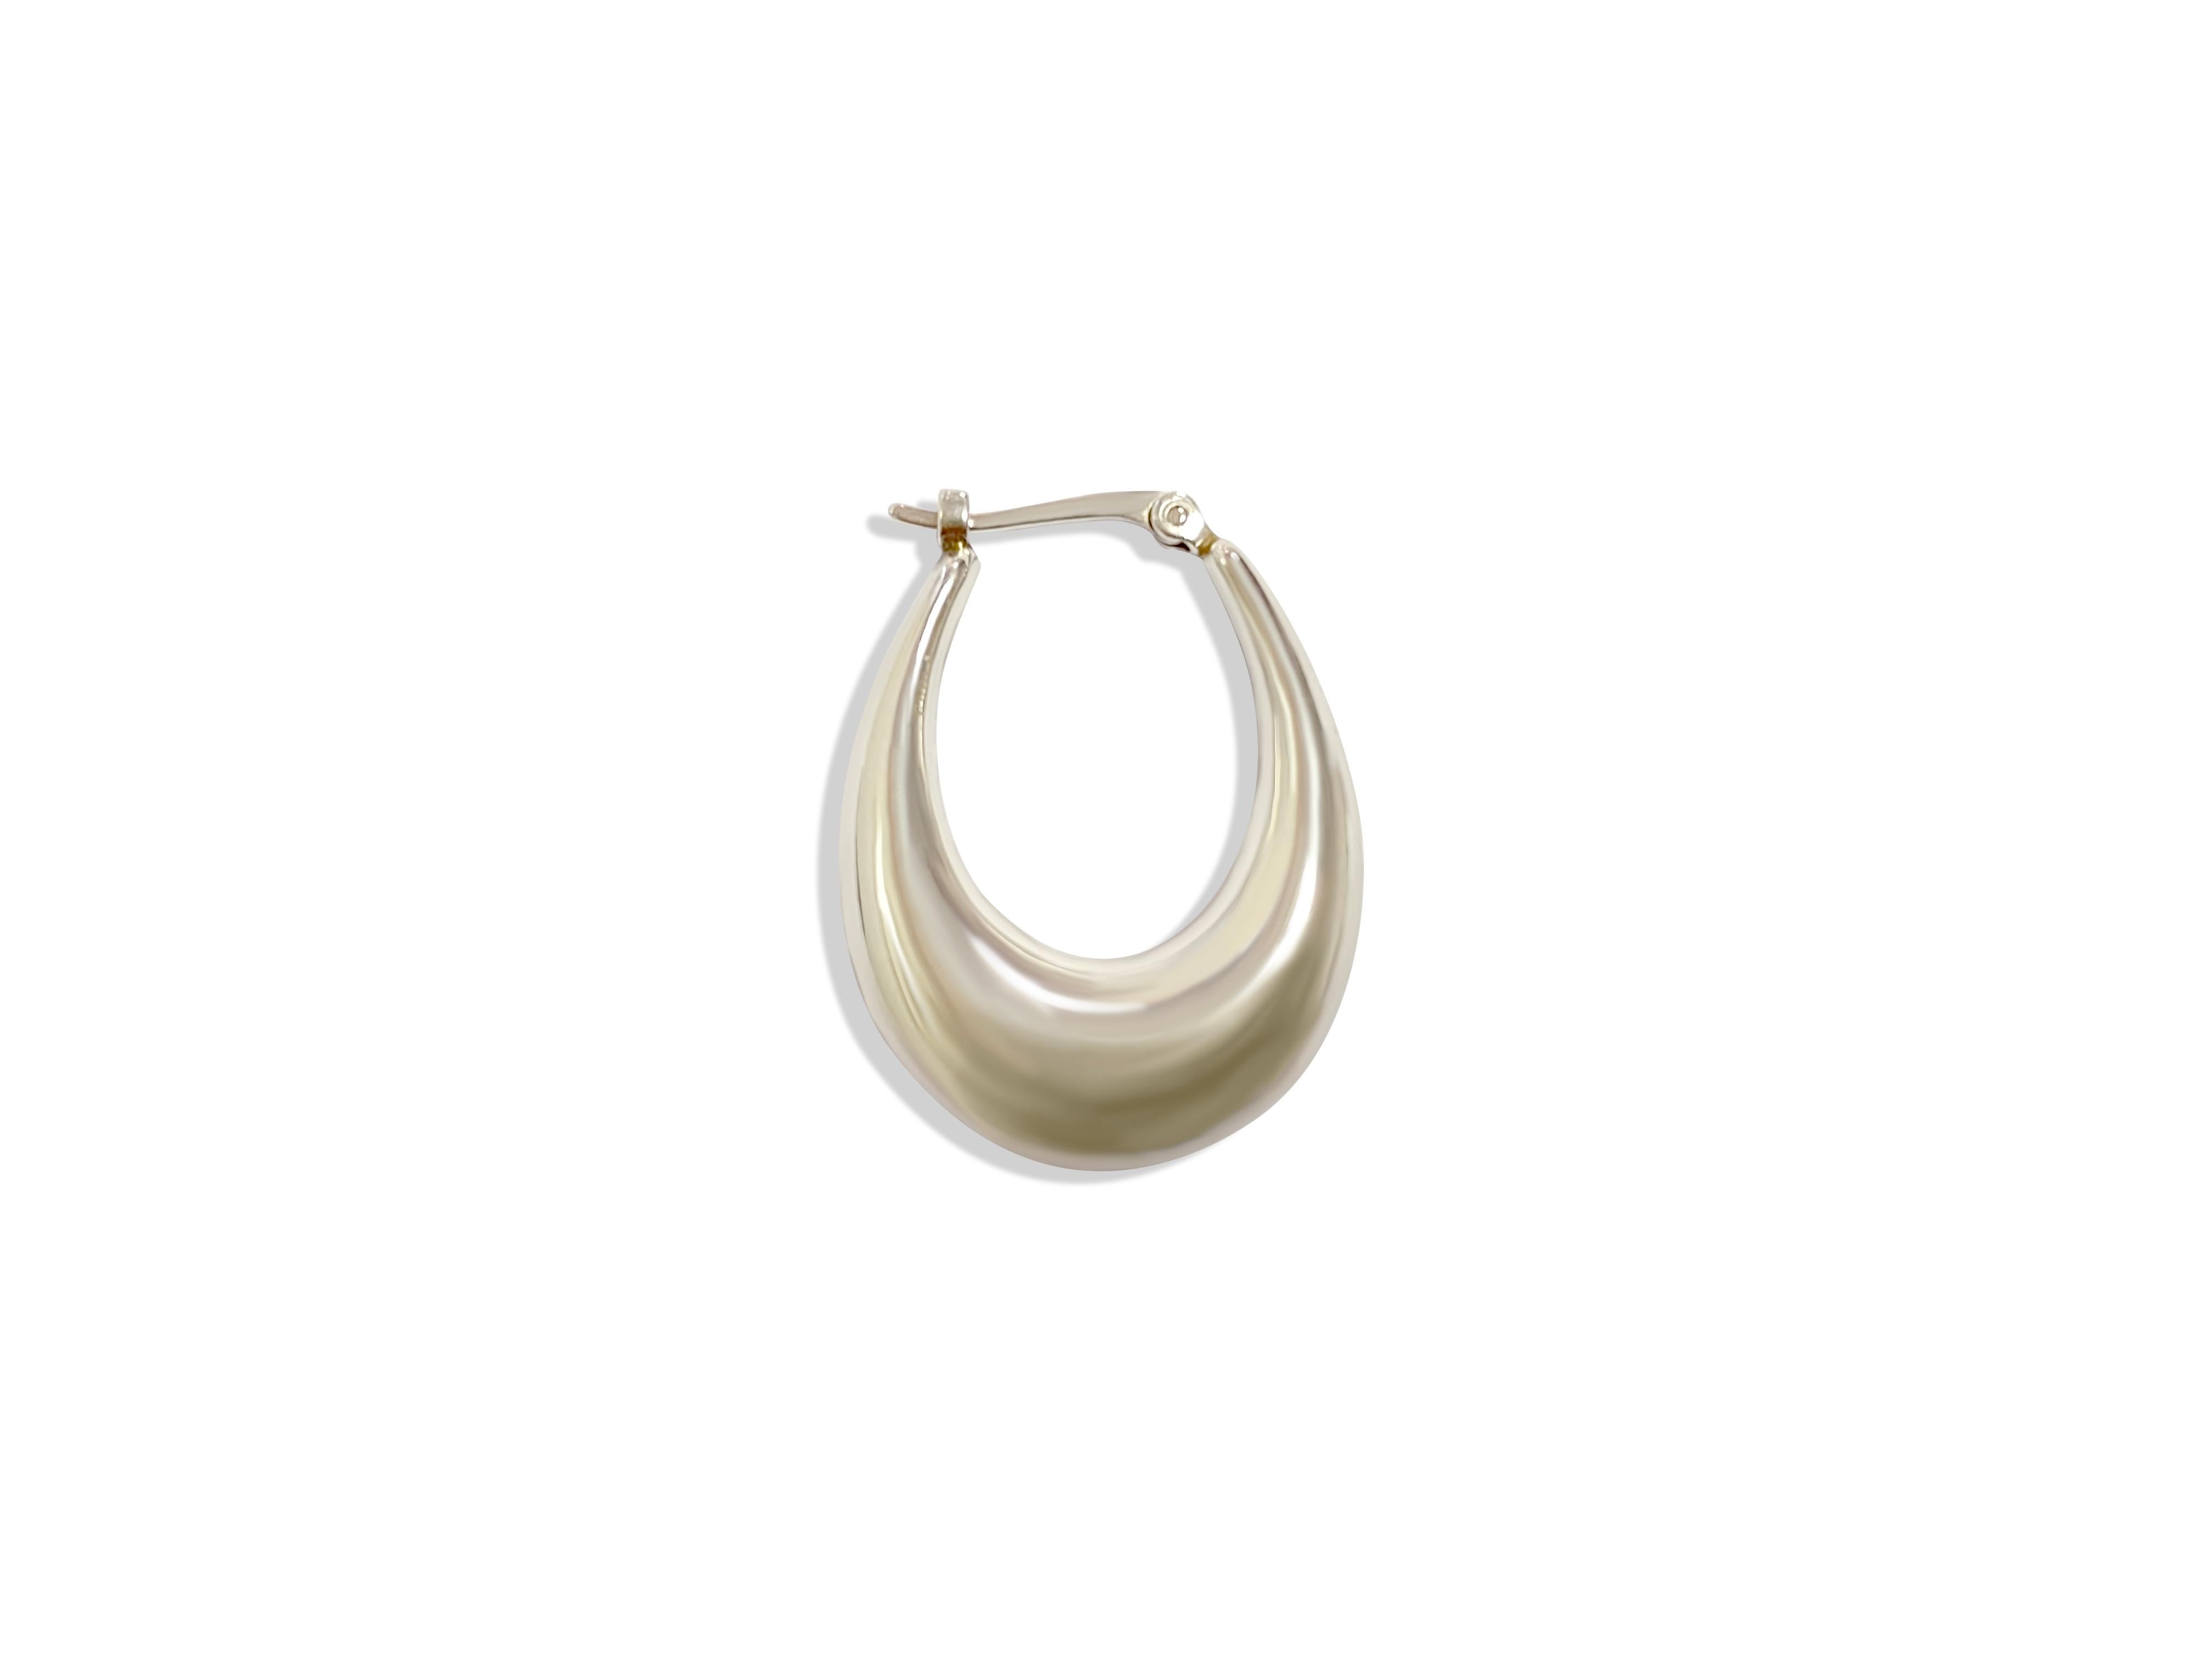 Brand: Carla. 

Metal: Solid 14k white gold. 

Chic style white gold earrings. Womens dangle hoop earrings. 